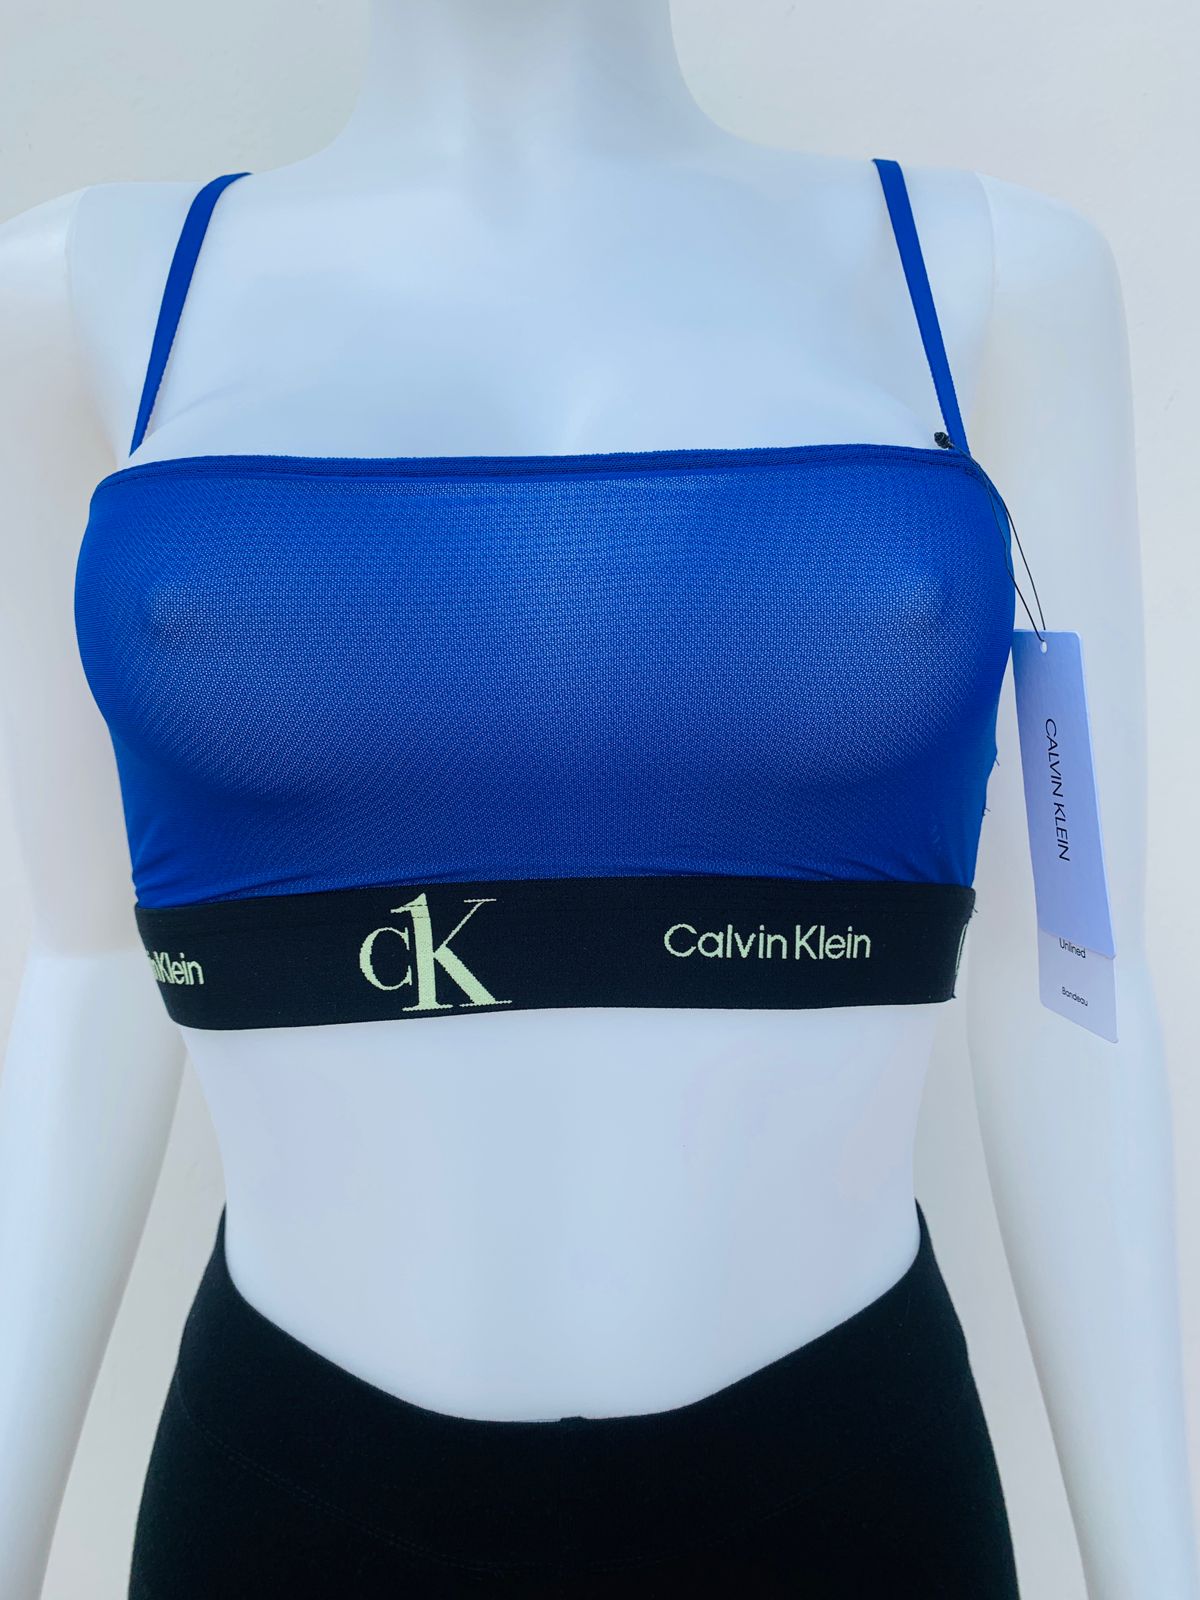 Top/ Bra Calvin Klein original, azul marino con tela transparente con elástico negro y letras CK CALVIN KLEIN en verde.